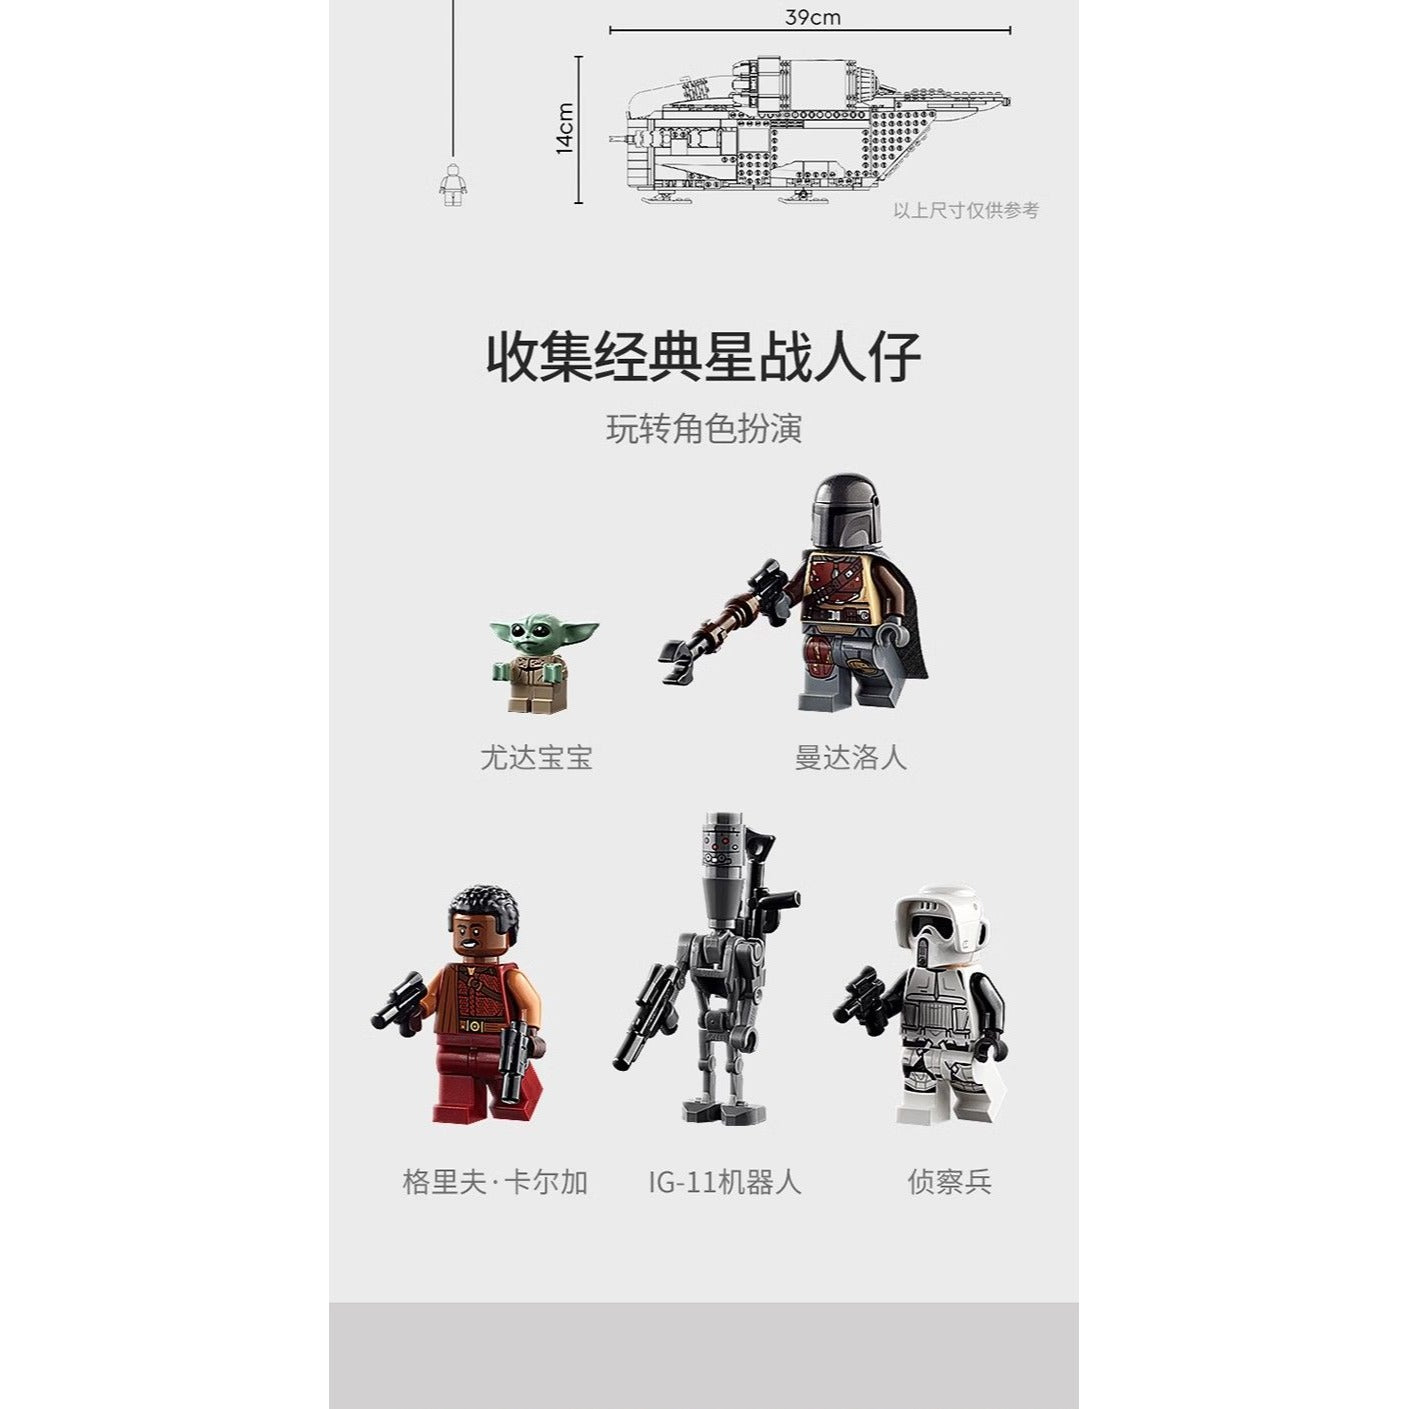 Mandalorian Razor Star Union, Star Wars. Lego Compatible, 5 Mini figures 1202pcs